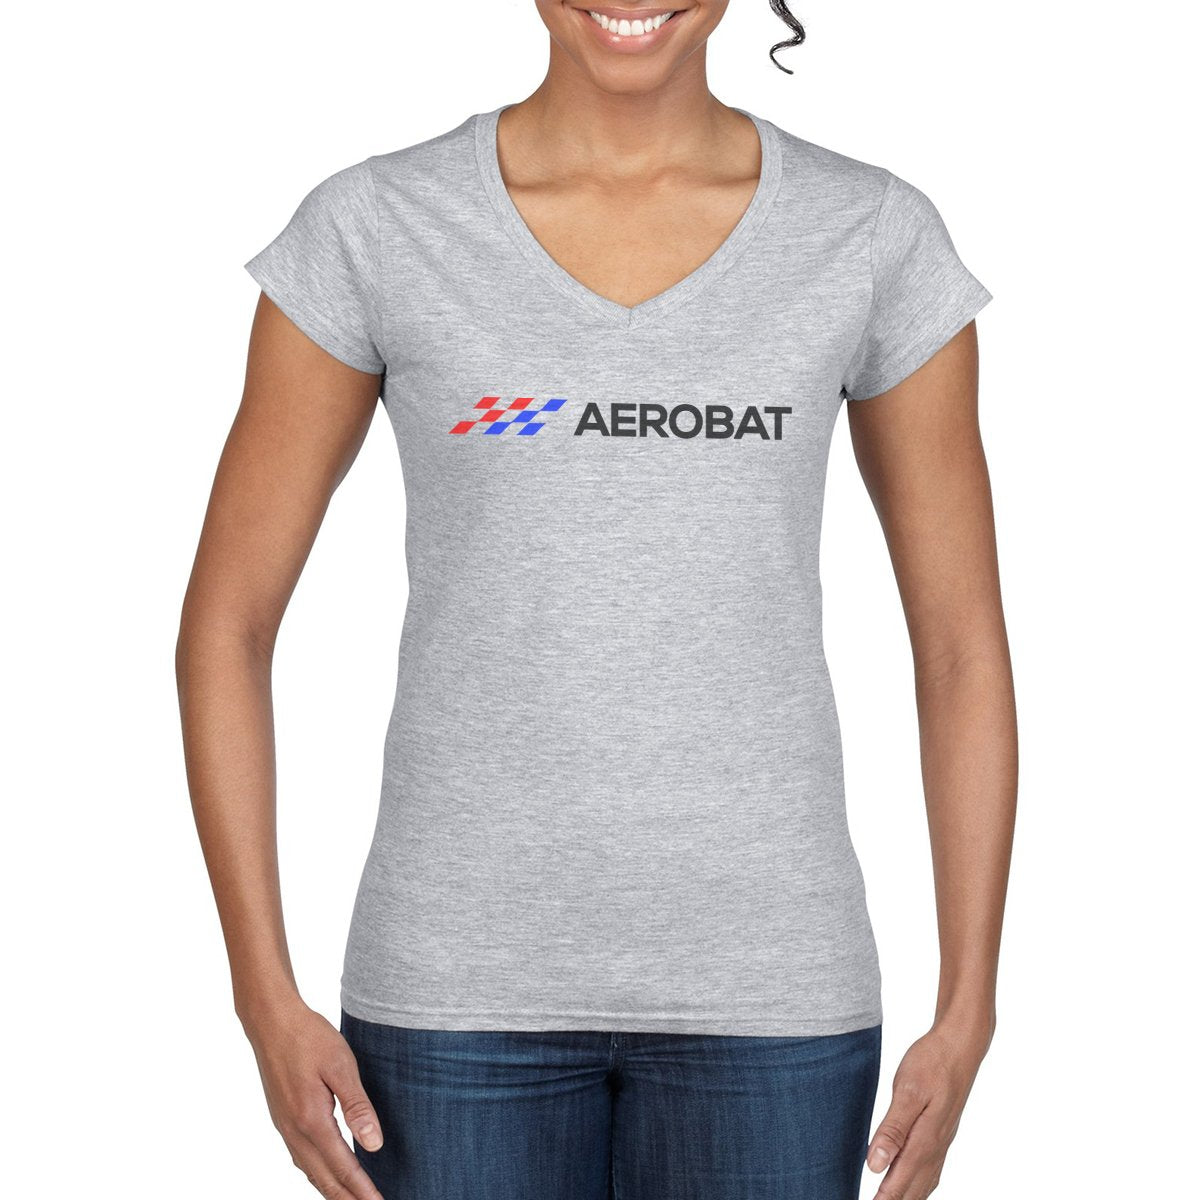 Cessna AEROBAT Vintage Design Women's T-Shirt